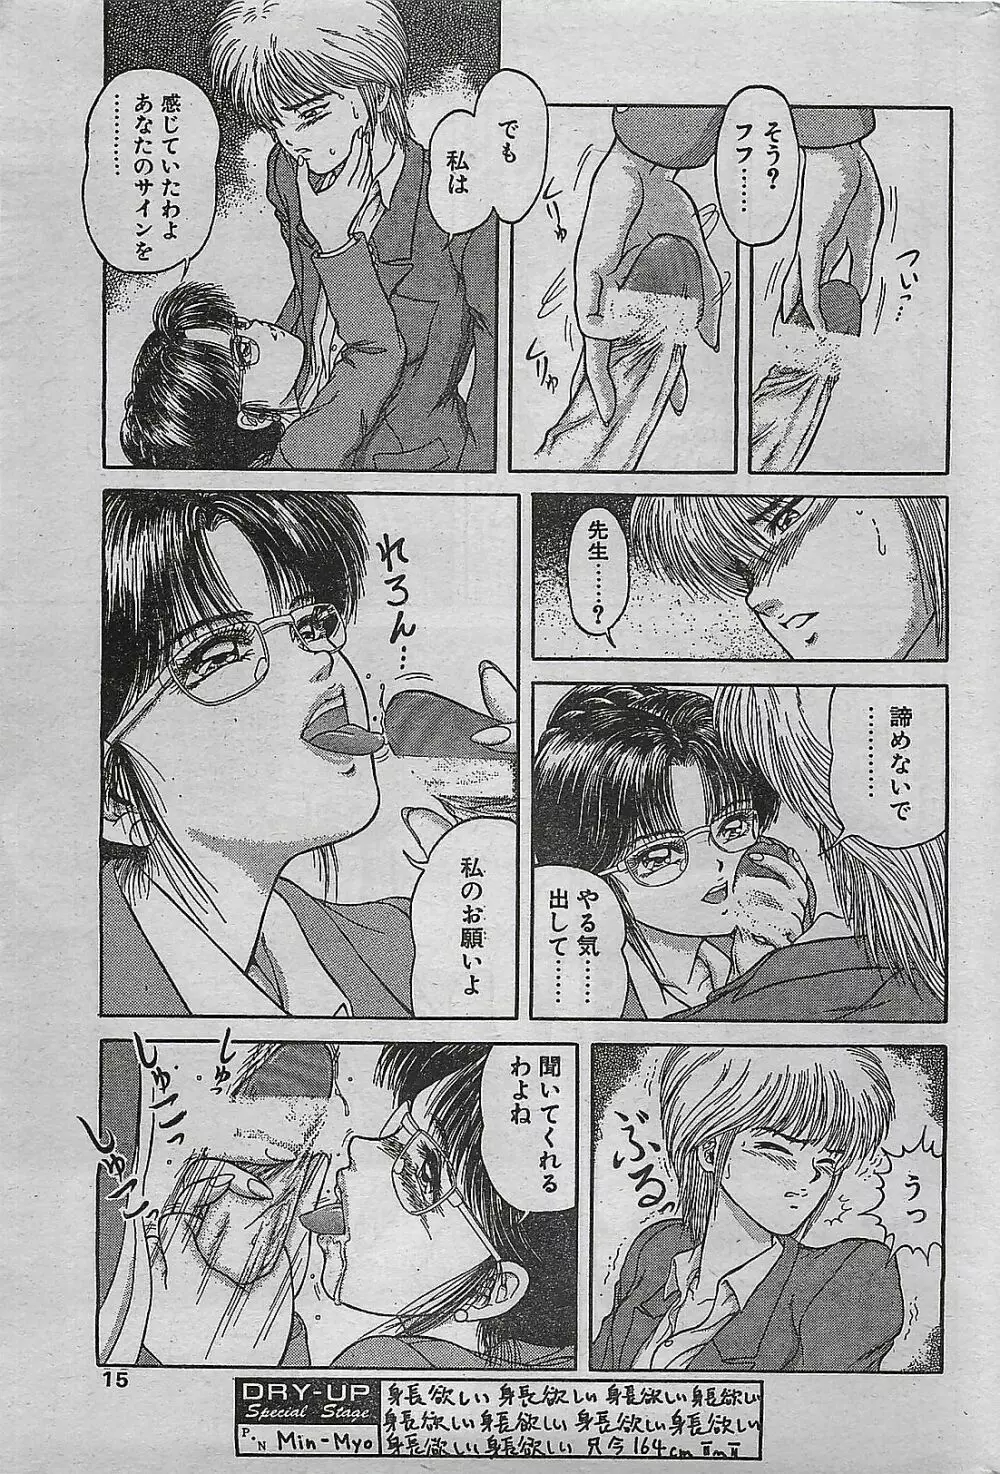 COMIC ドライ-アップ No.4 1995年02月号 15ページ